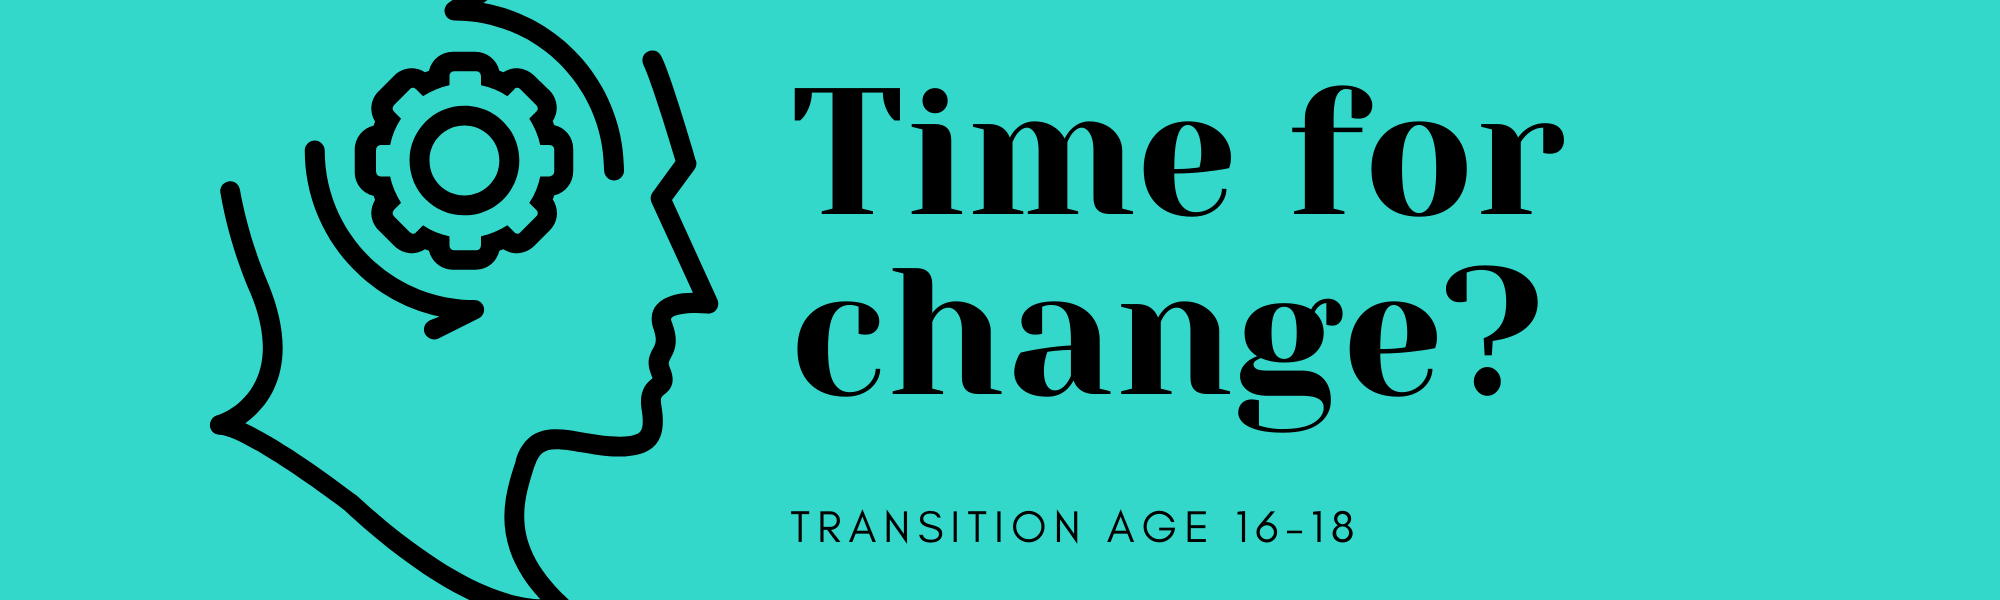 Transition banner- time for change